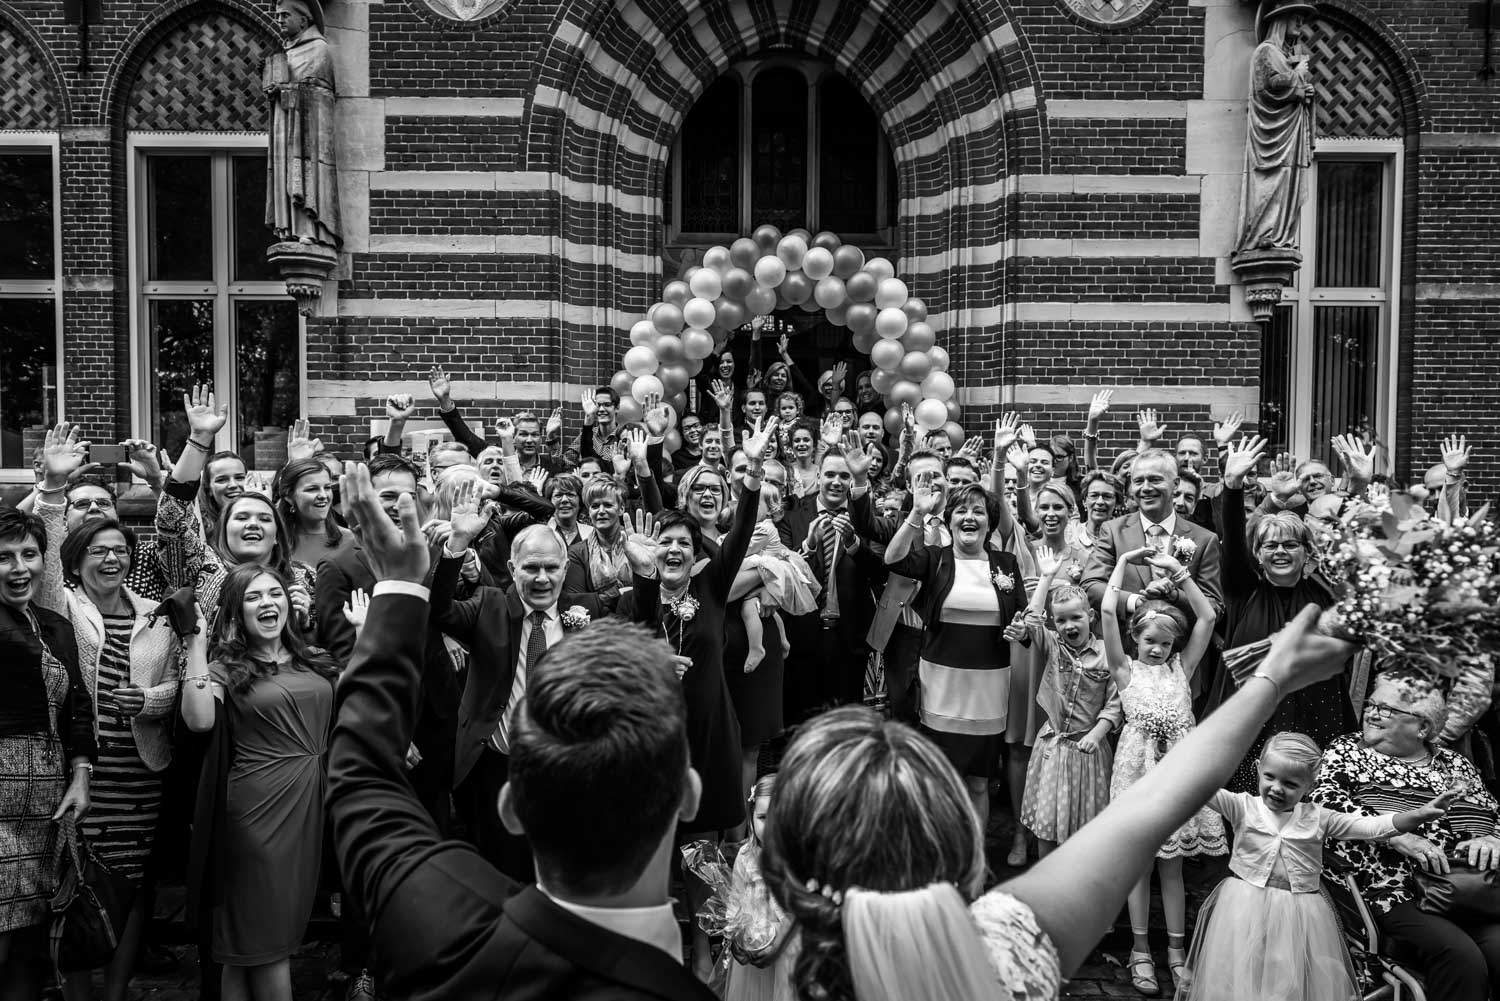 Cfoto maakt spontane groepsfoto bij Bovendonk bruidsfotograaf me